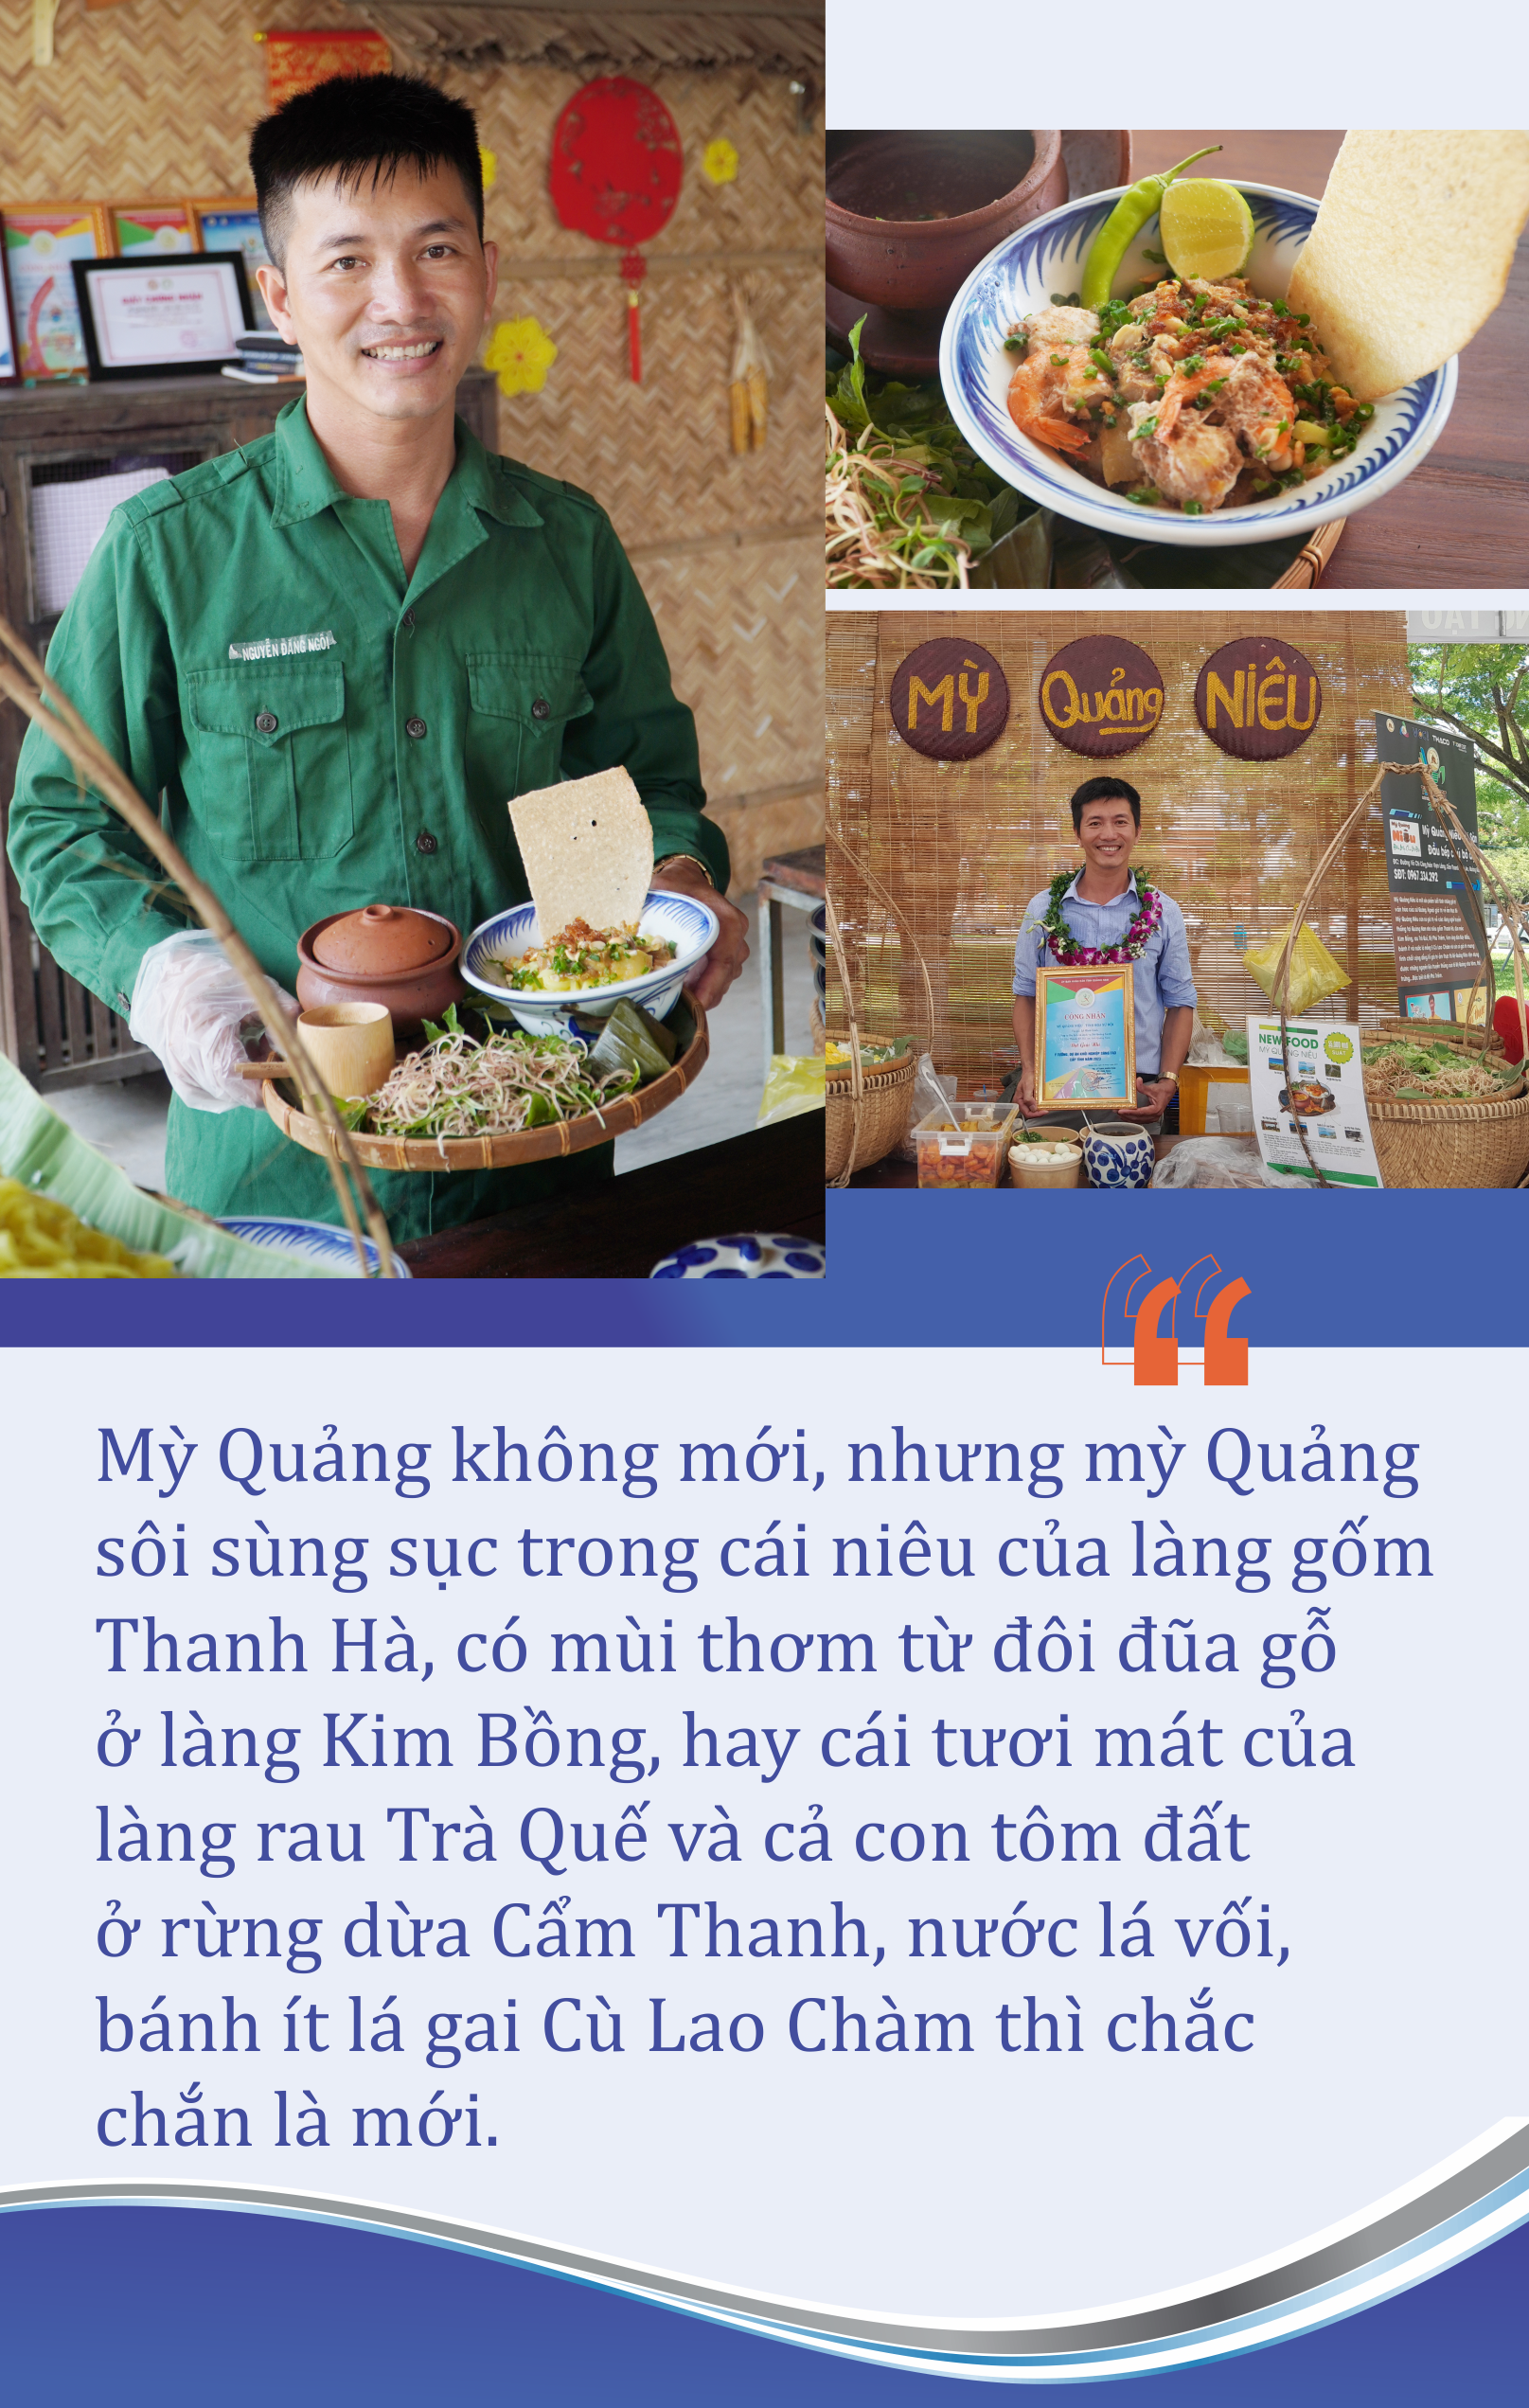 Start-up Canh and his Mi Quang Nieu